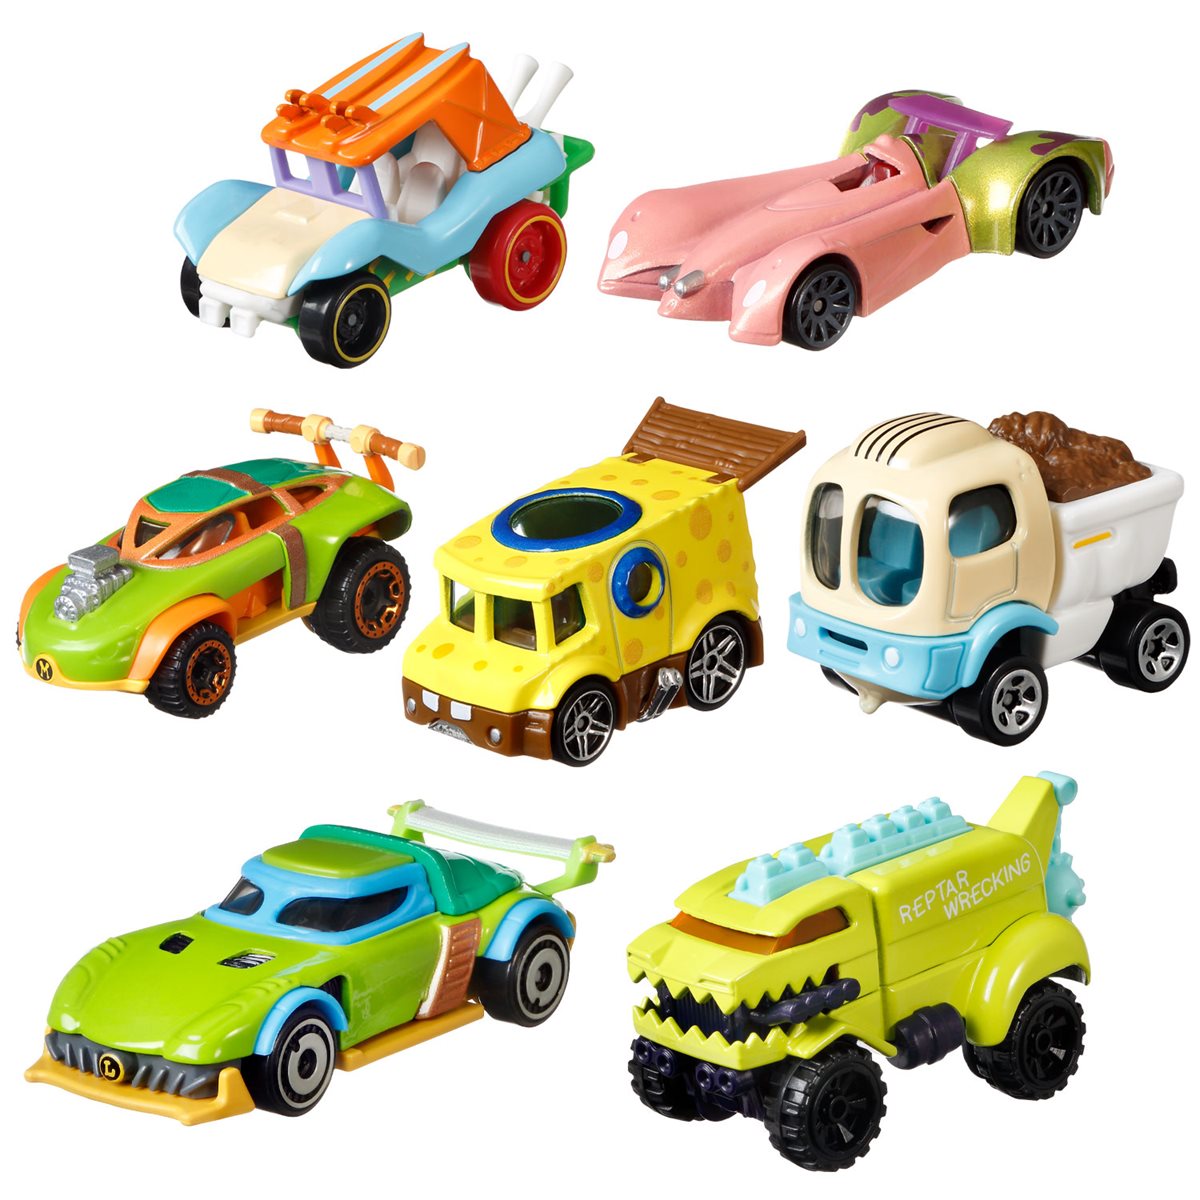 Hot Wheels Nickelodeon Patrick Spongebob Squarepants Character Cars ...